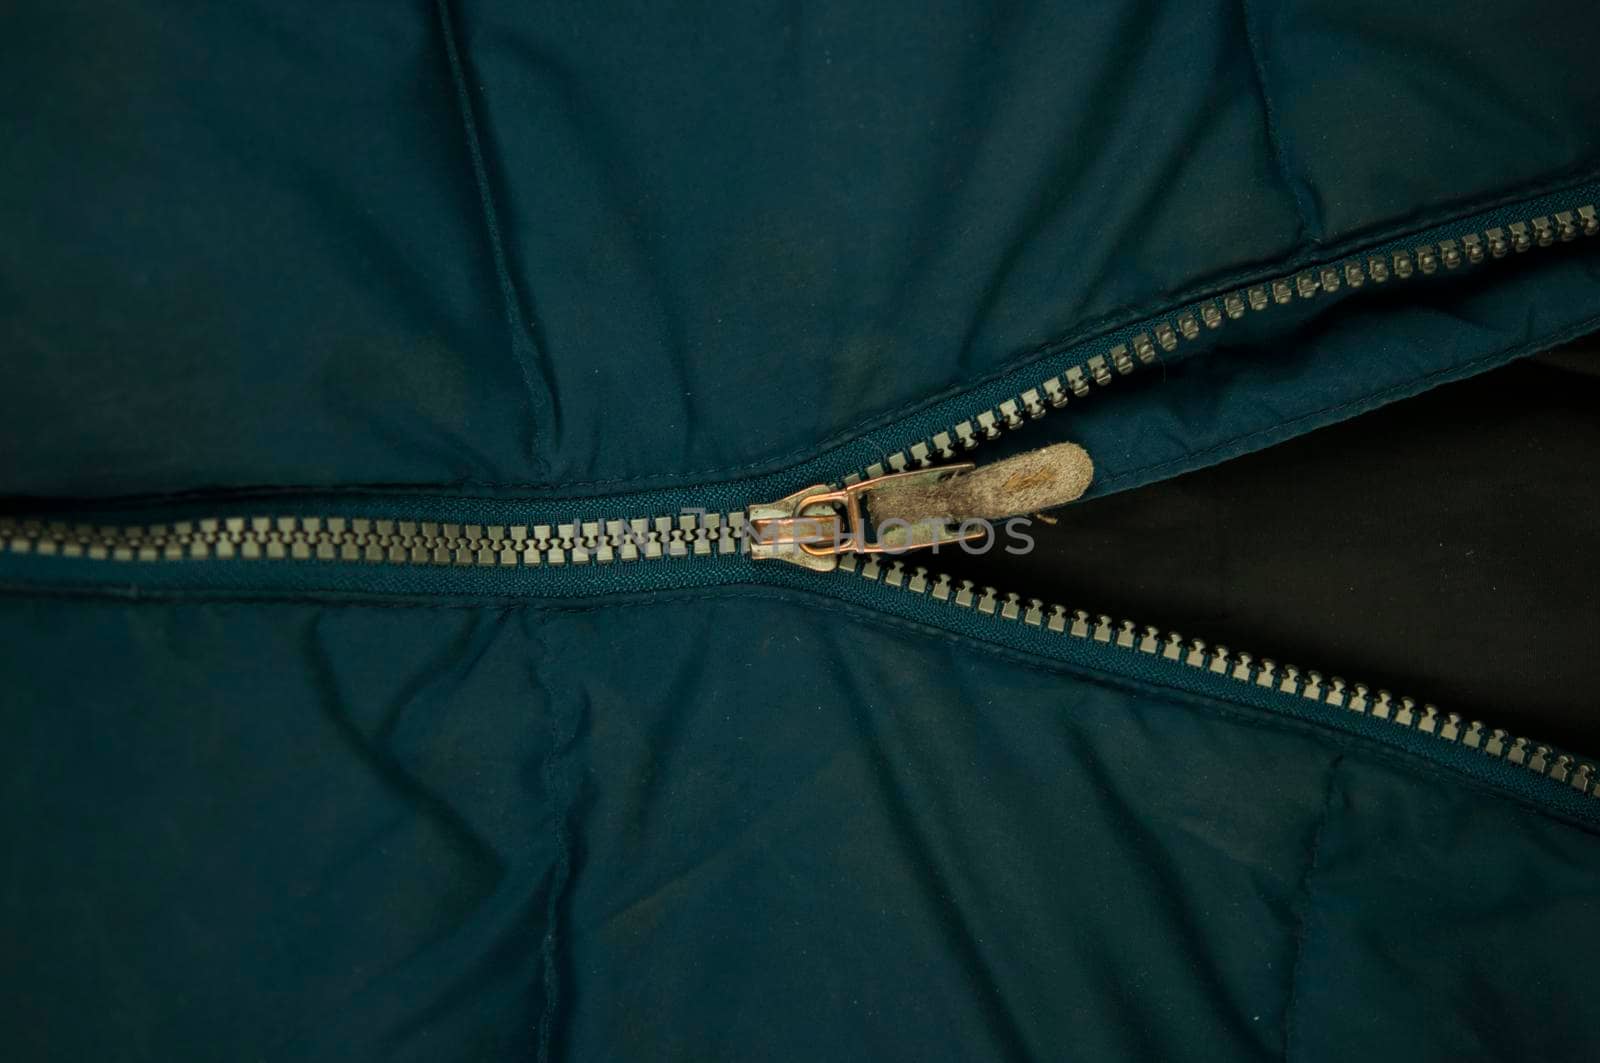 Detail of locking zipper on jacket. Close up macro local focus shot. by inxti